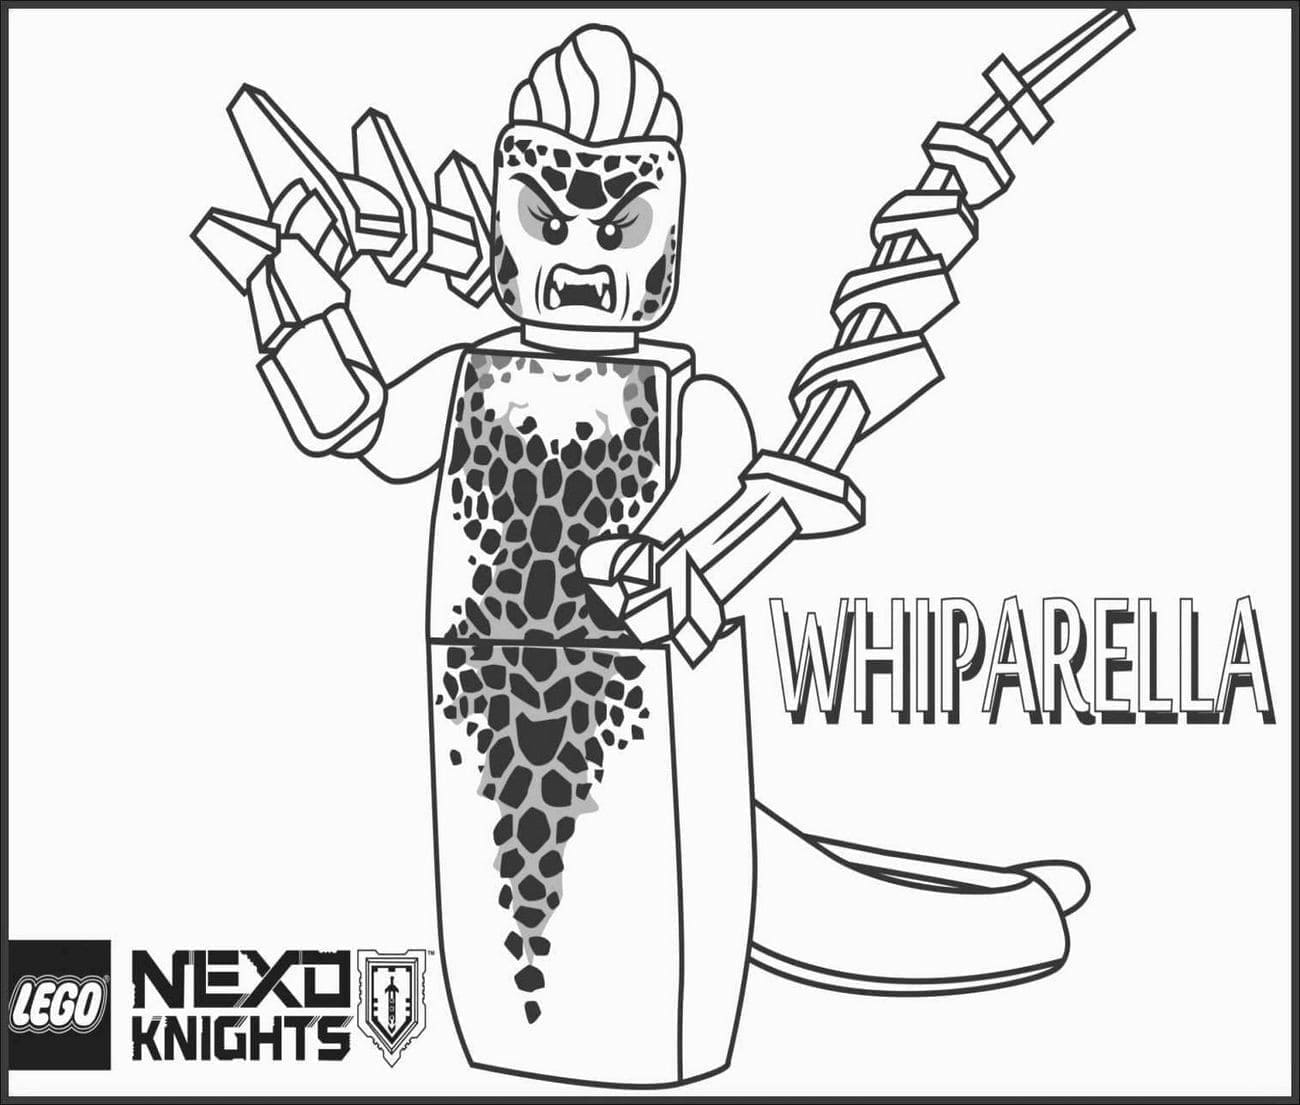 Målarbild Lego Nexo Knights Whiparella